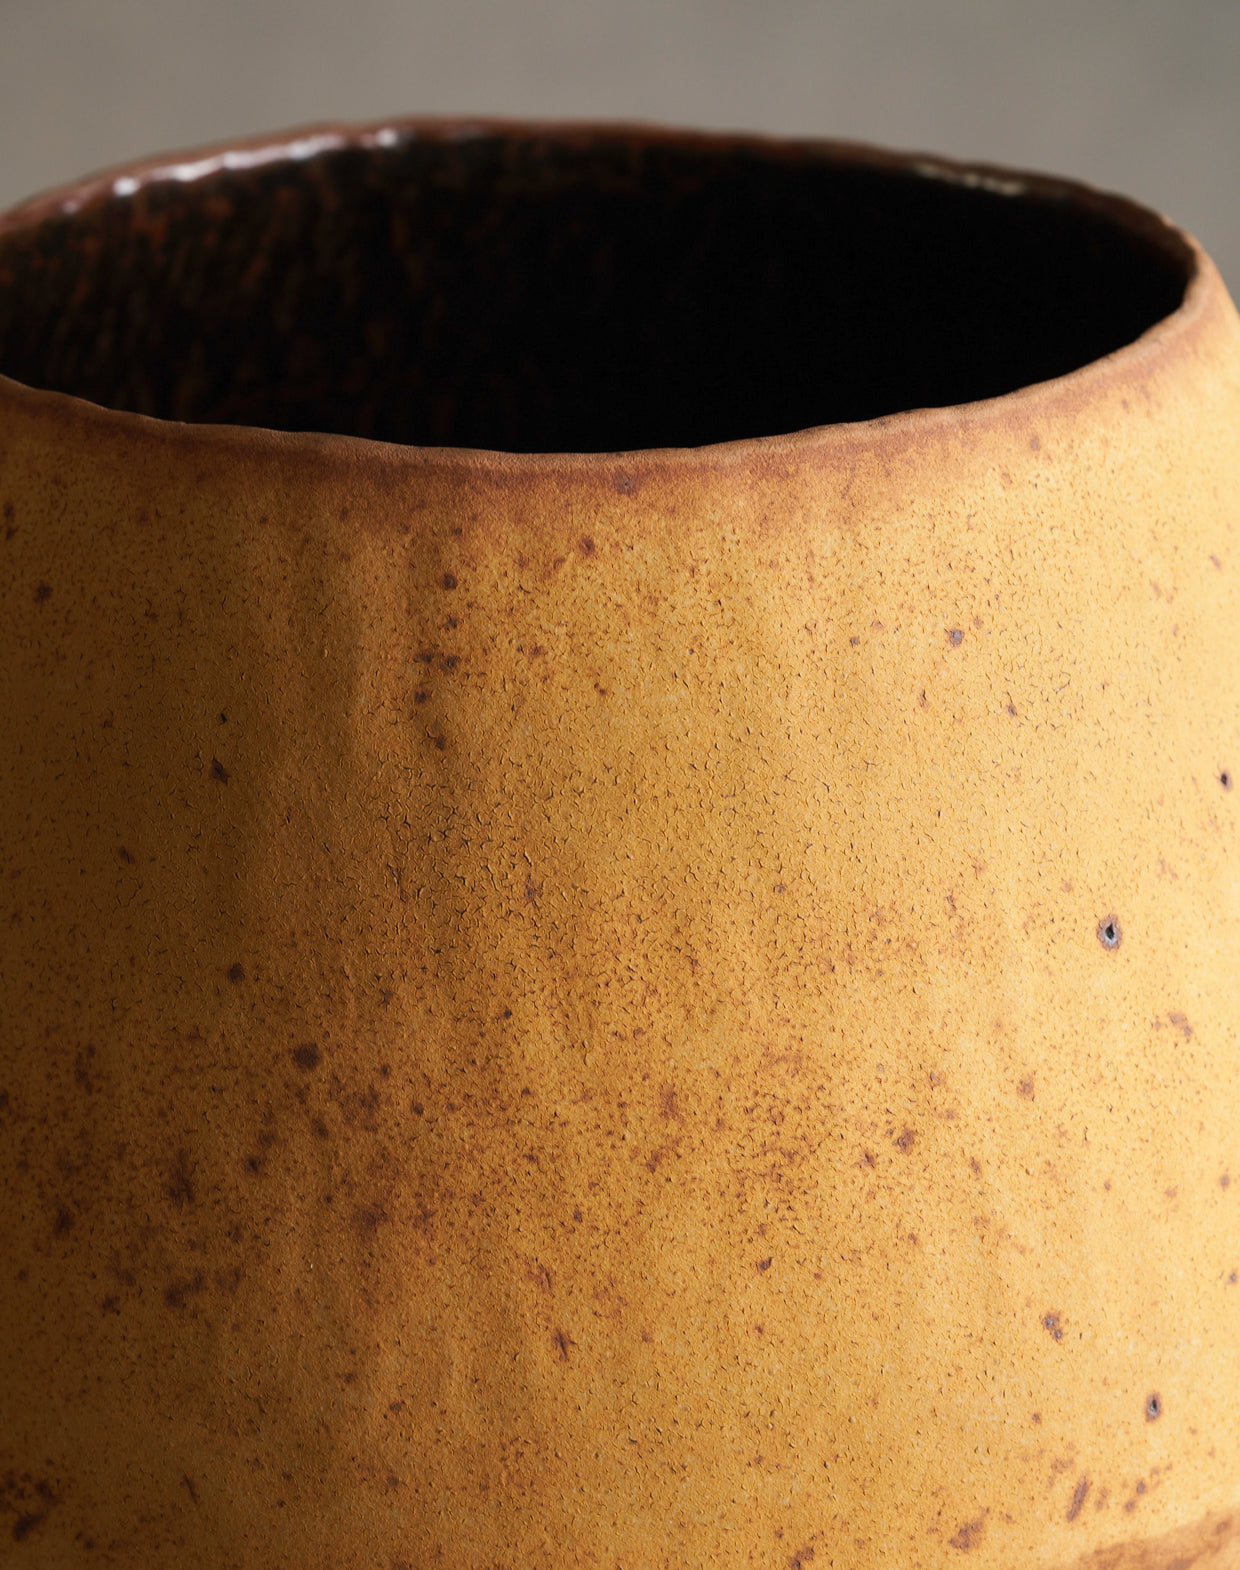 Rick Hintze Coiled Stoneware Vessel, "Untitled" No. 06